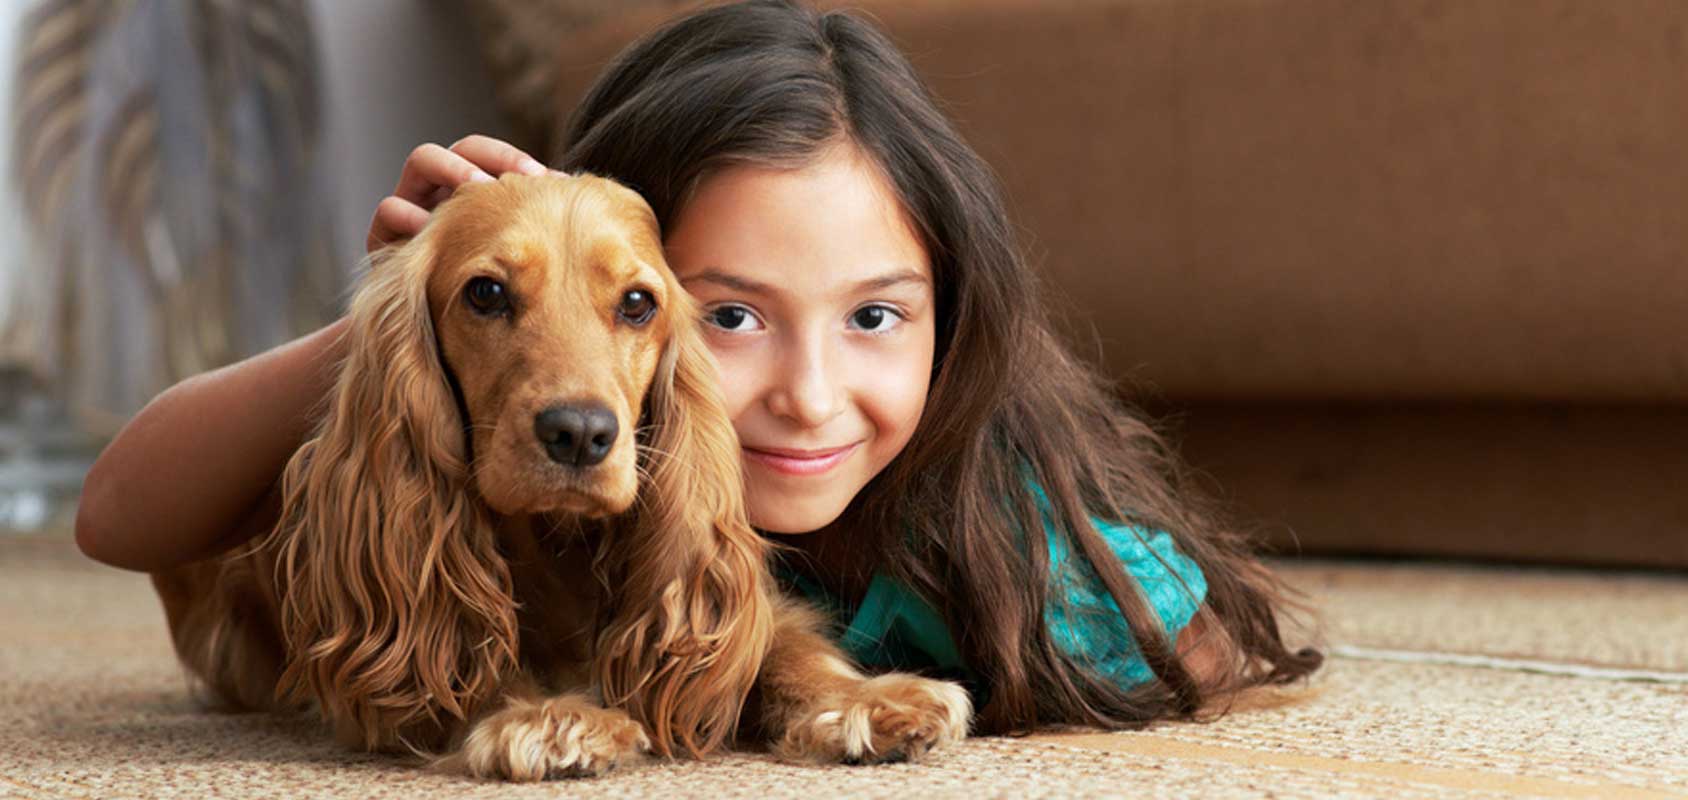 Girl and dog on carpet